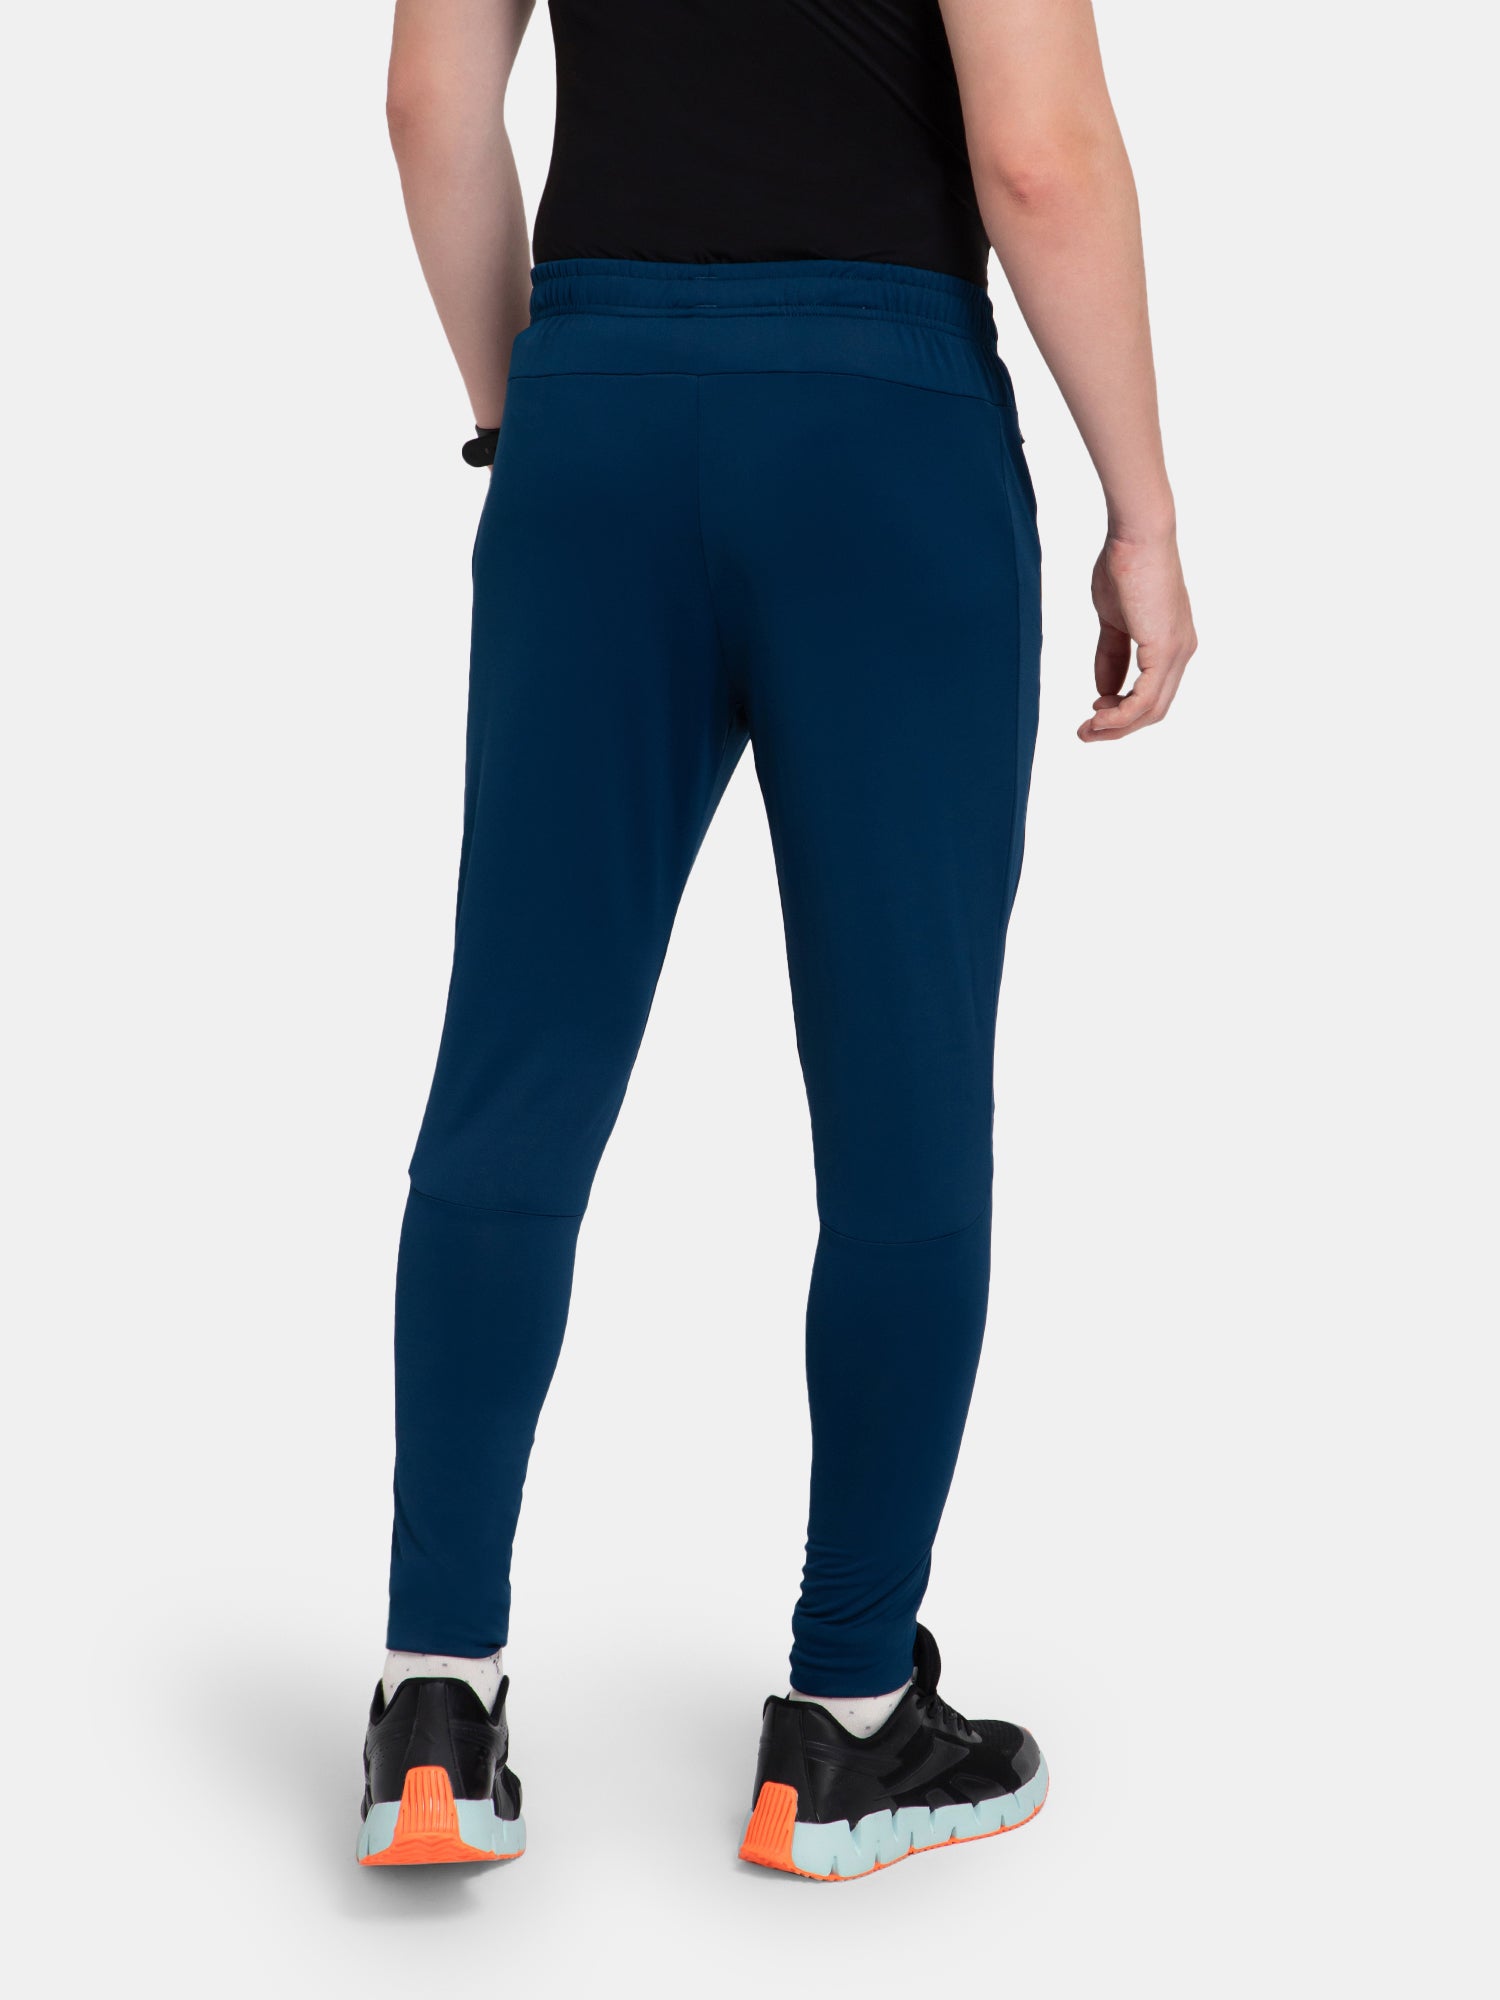 NIKE RUNNING PHENOM Elite Knit Mens Size Xxl 2Xl Black Joggers Pants  Reflective £39.99 - PicClick UK